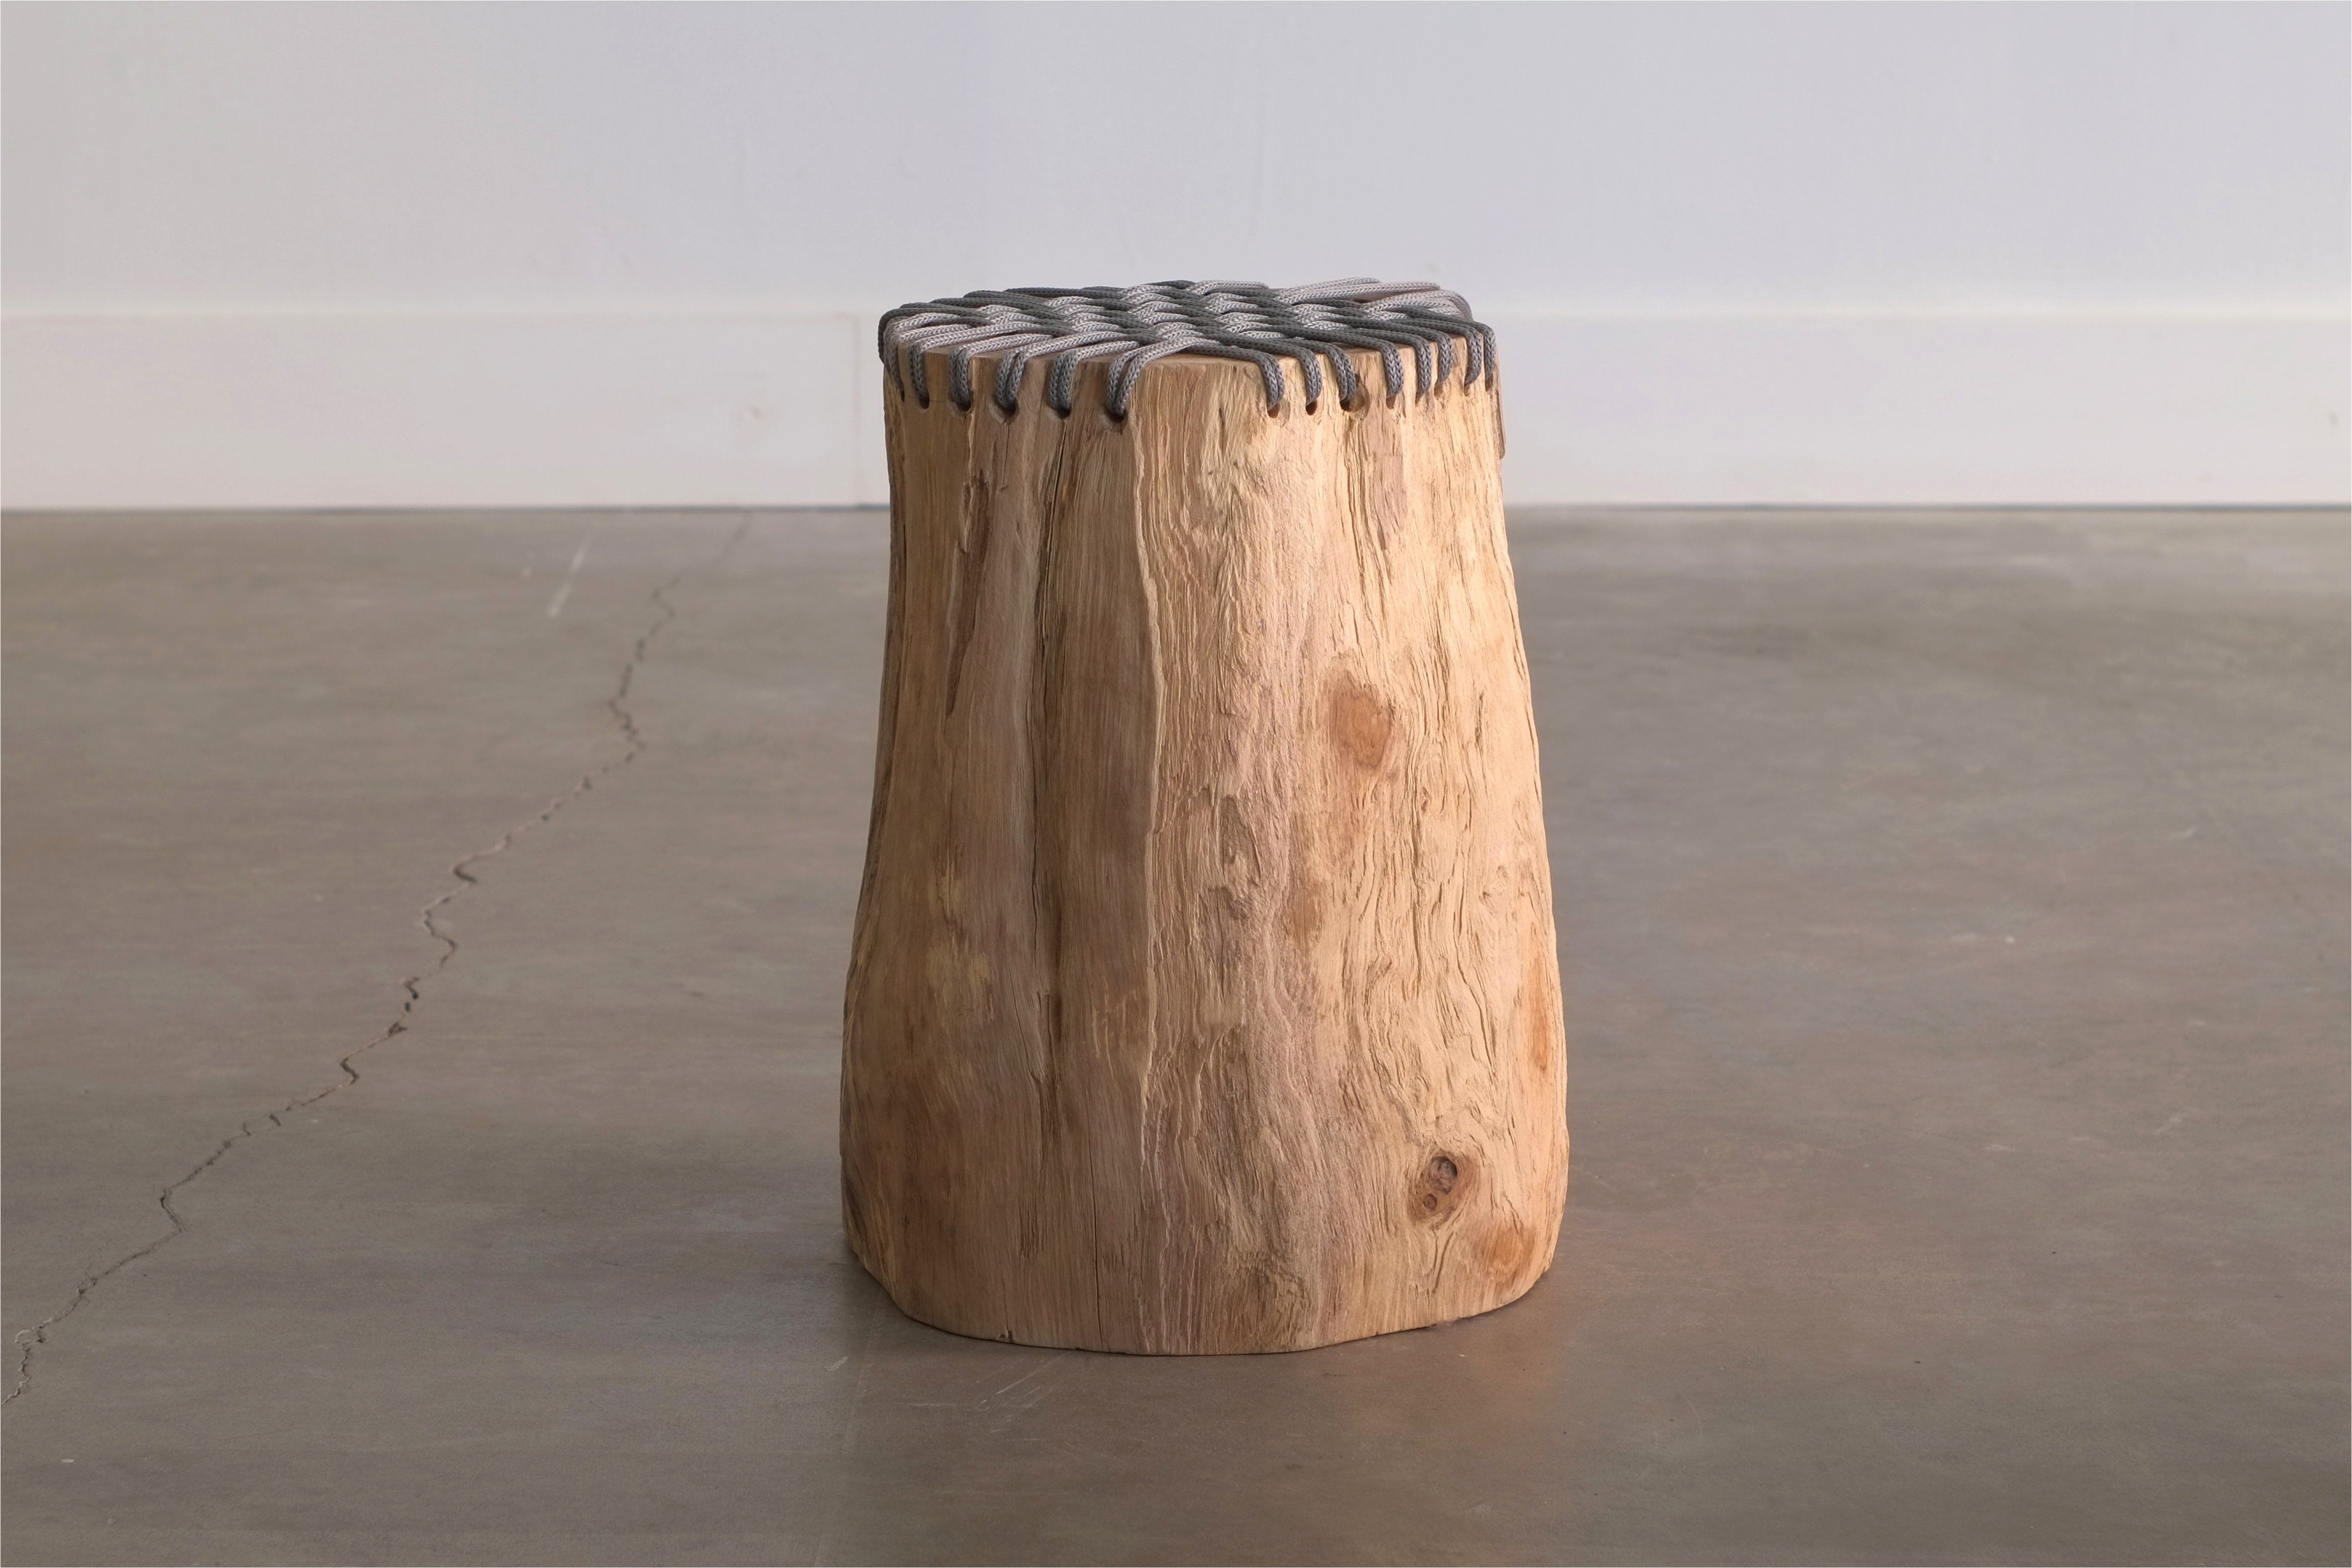 41 Lovely Wood Stump Table New - Best Table Design Ideas